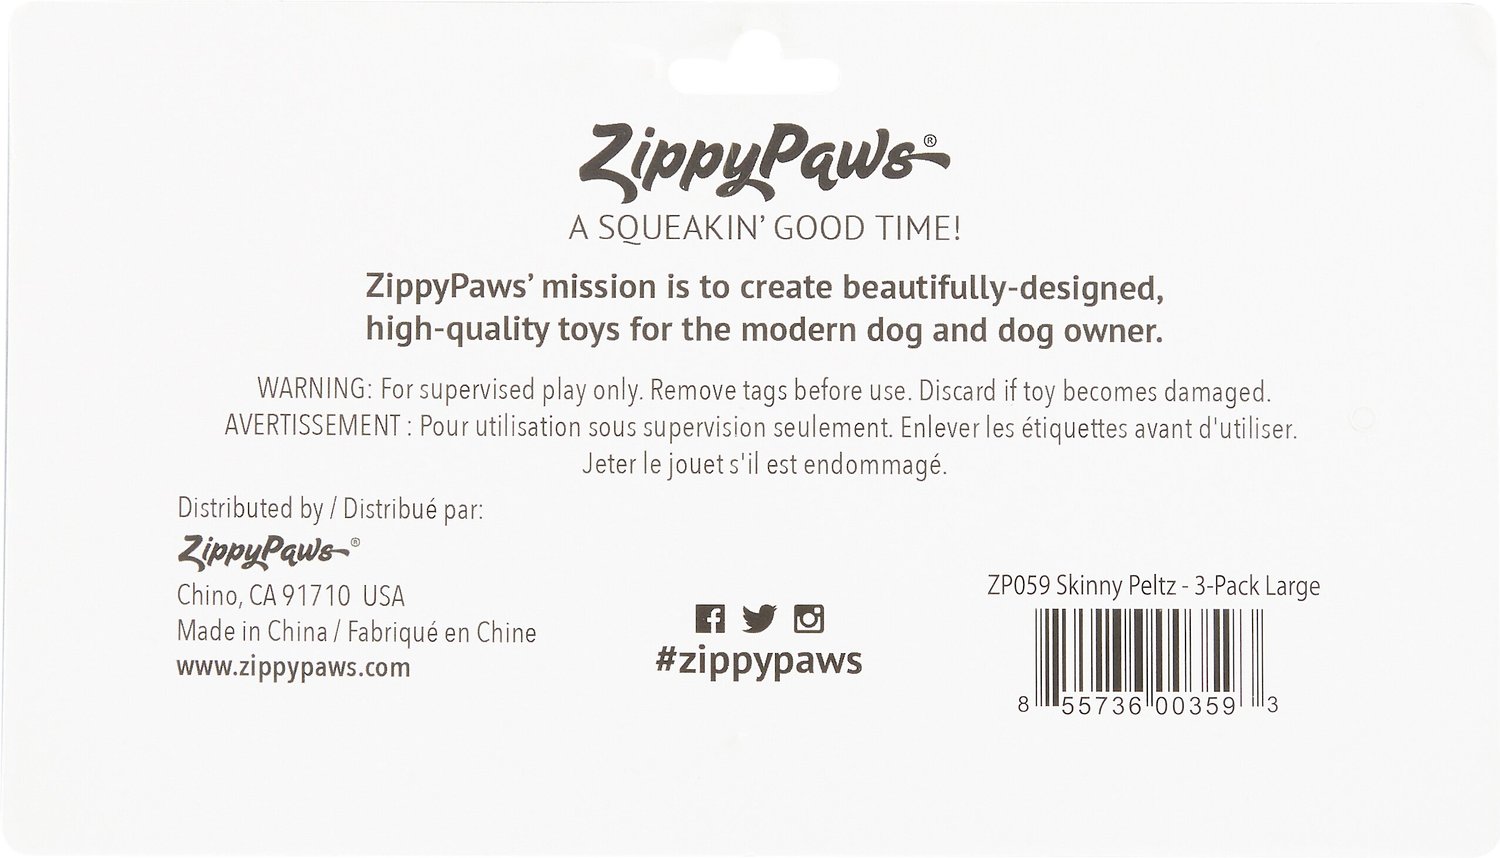 zippypaws skinny peltz